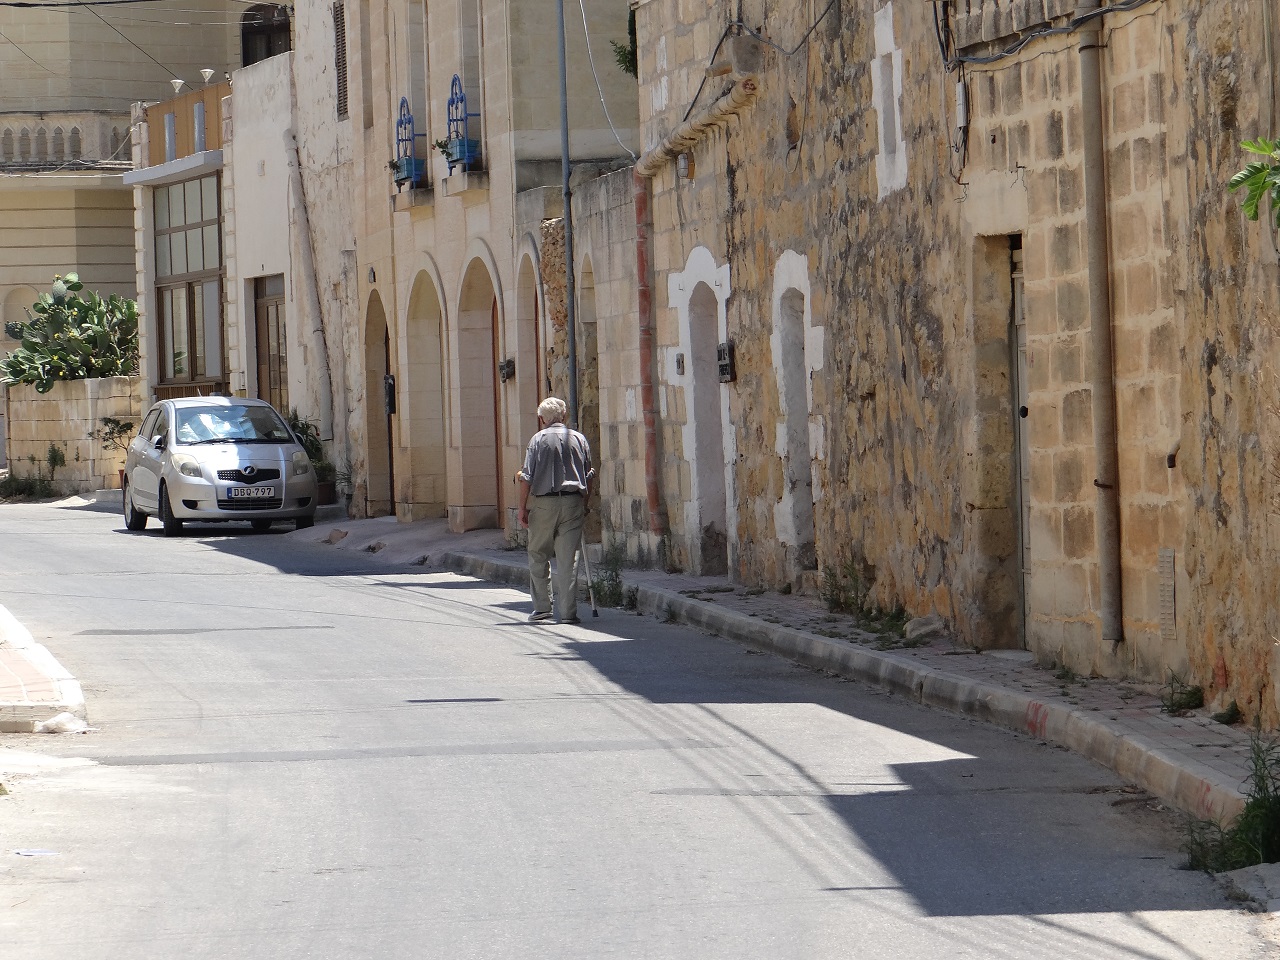 Gozo residential streets